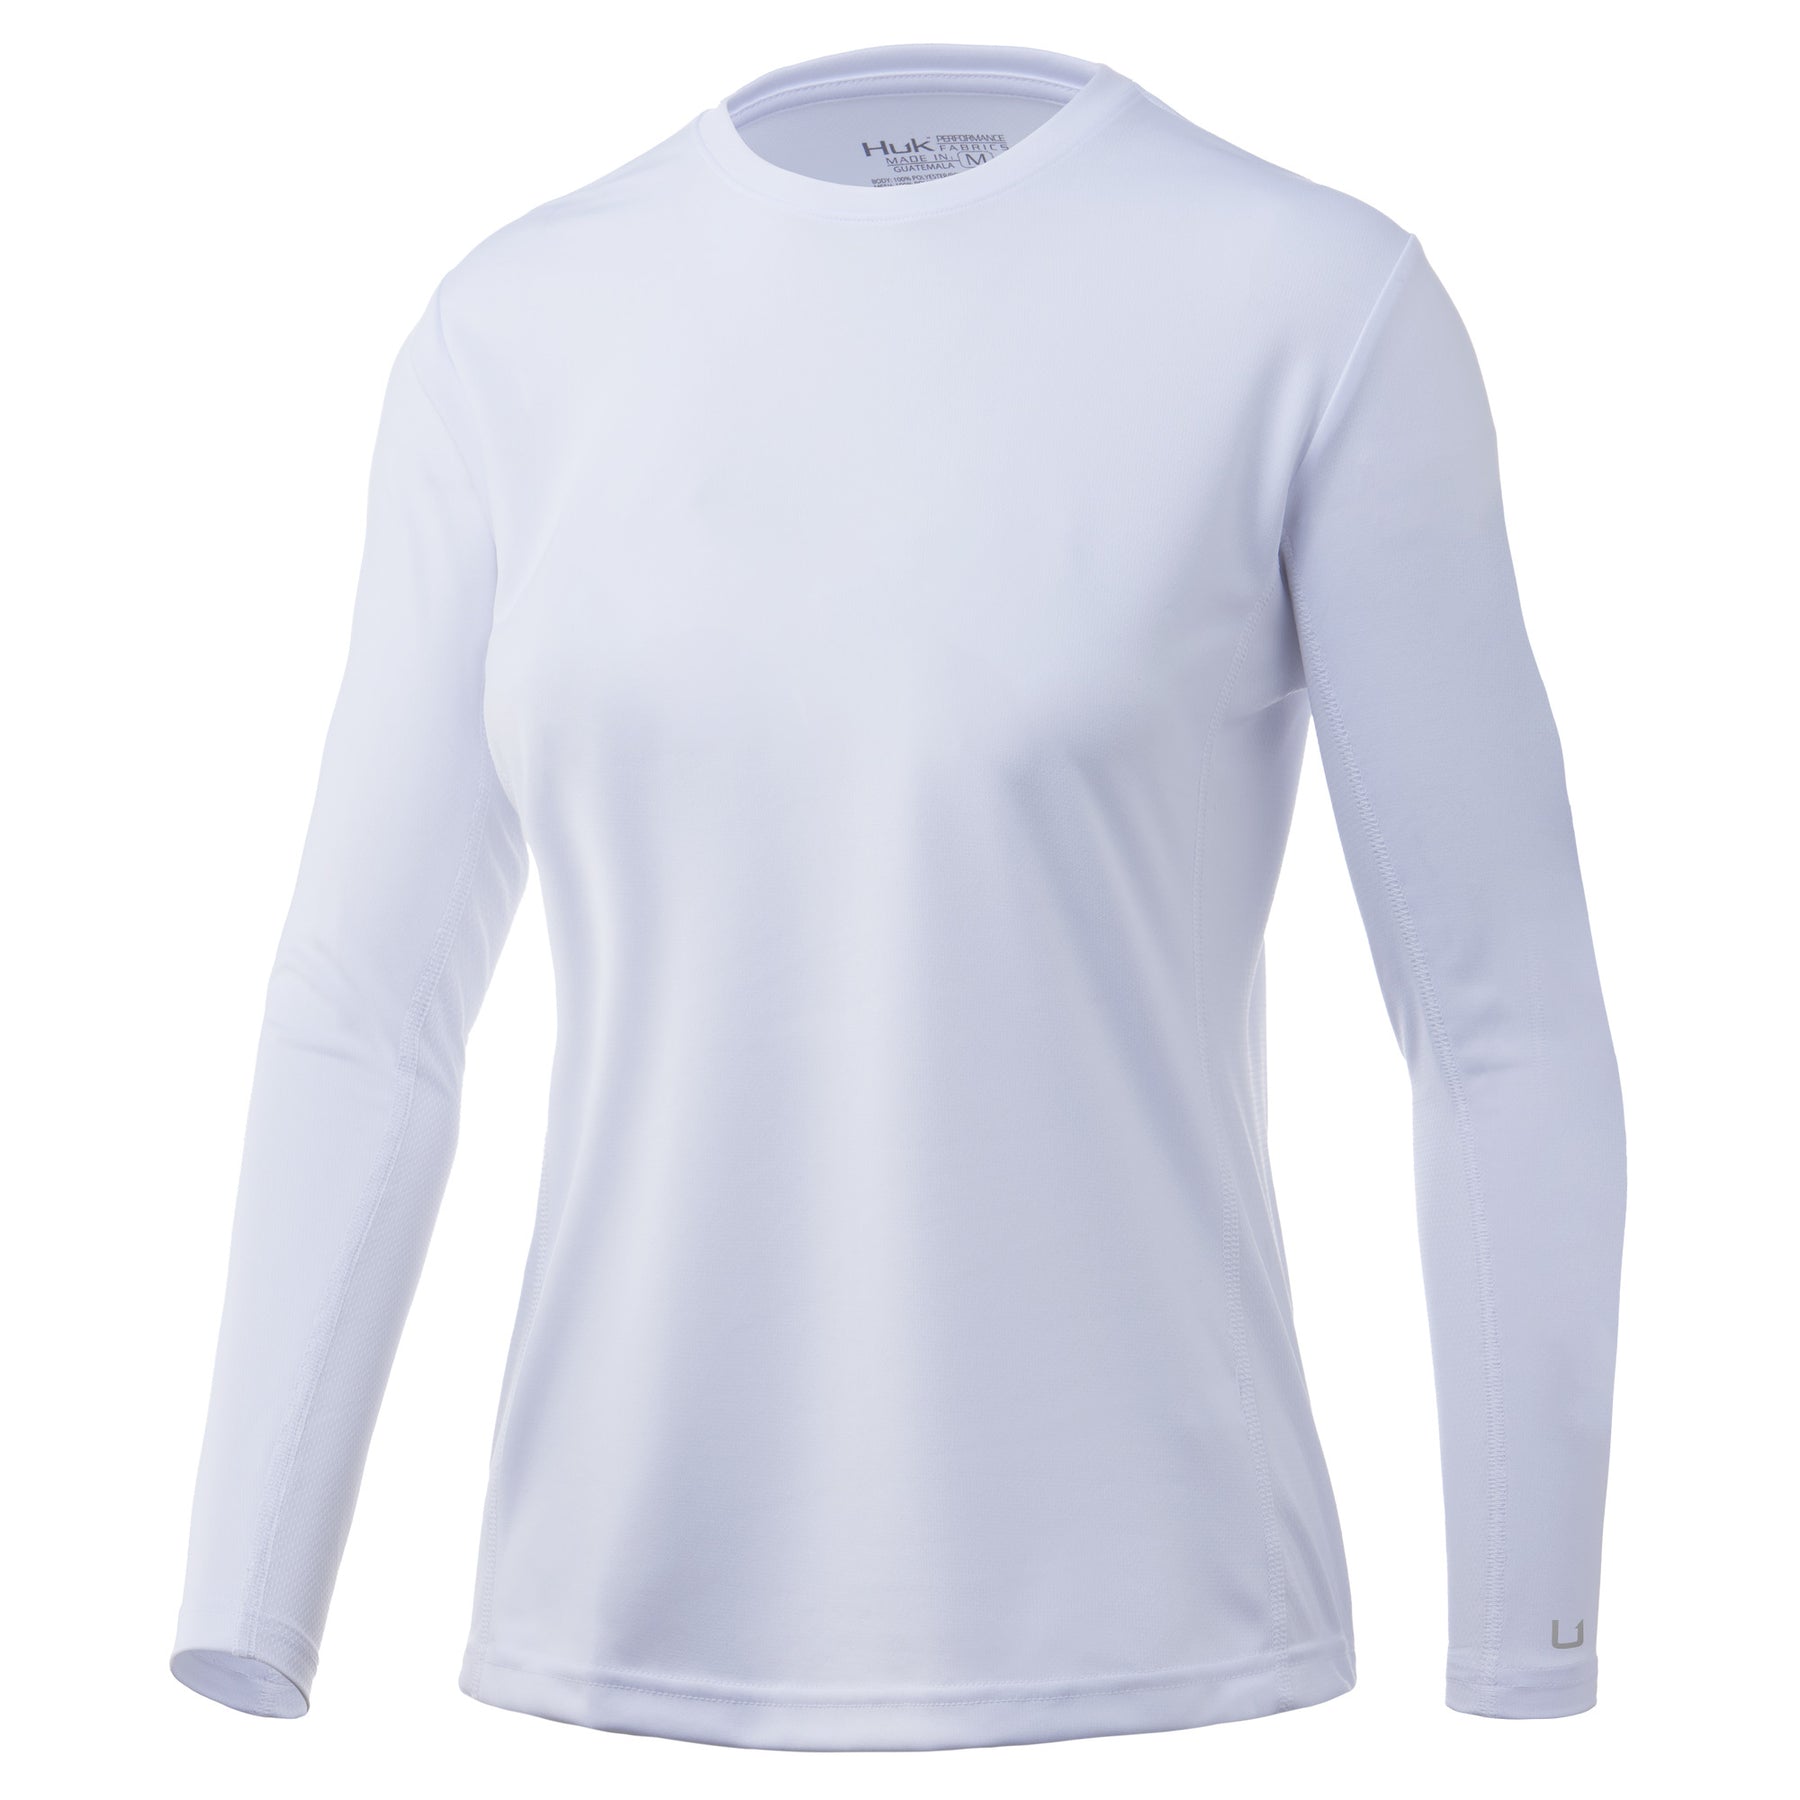 Huk Womens Icon X Long Sleeve Shirt  Long-Sleeve Performance Shirt with  UPF 30+ Sun Protection, Medium Teal, Extra Small 